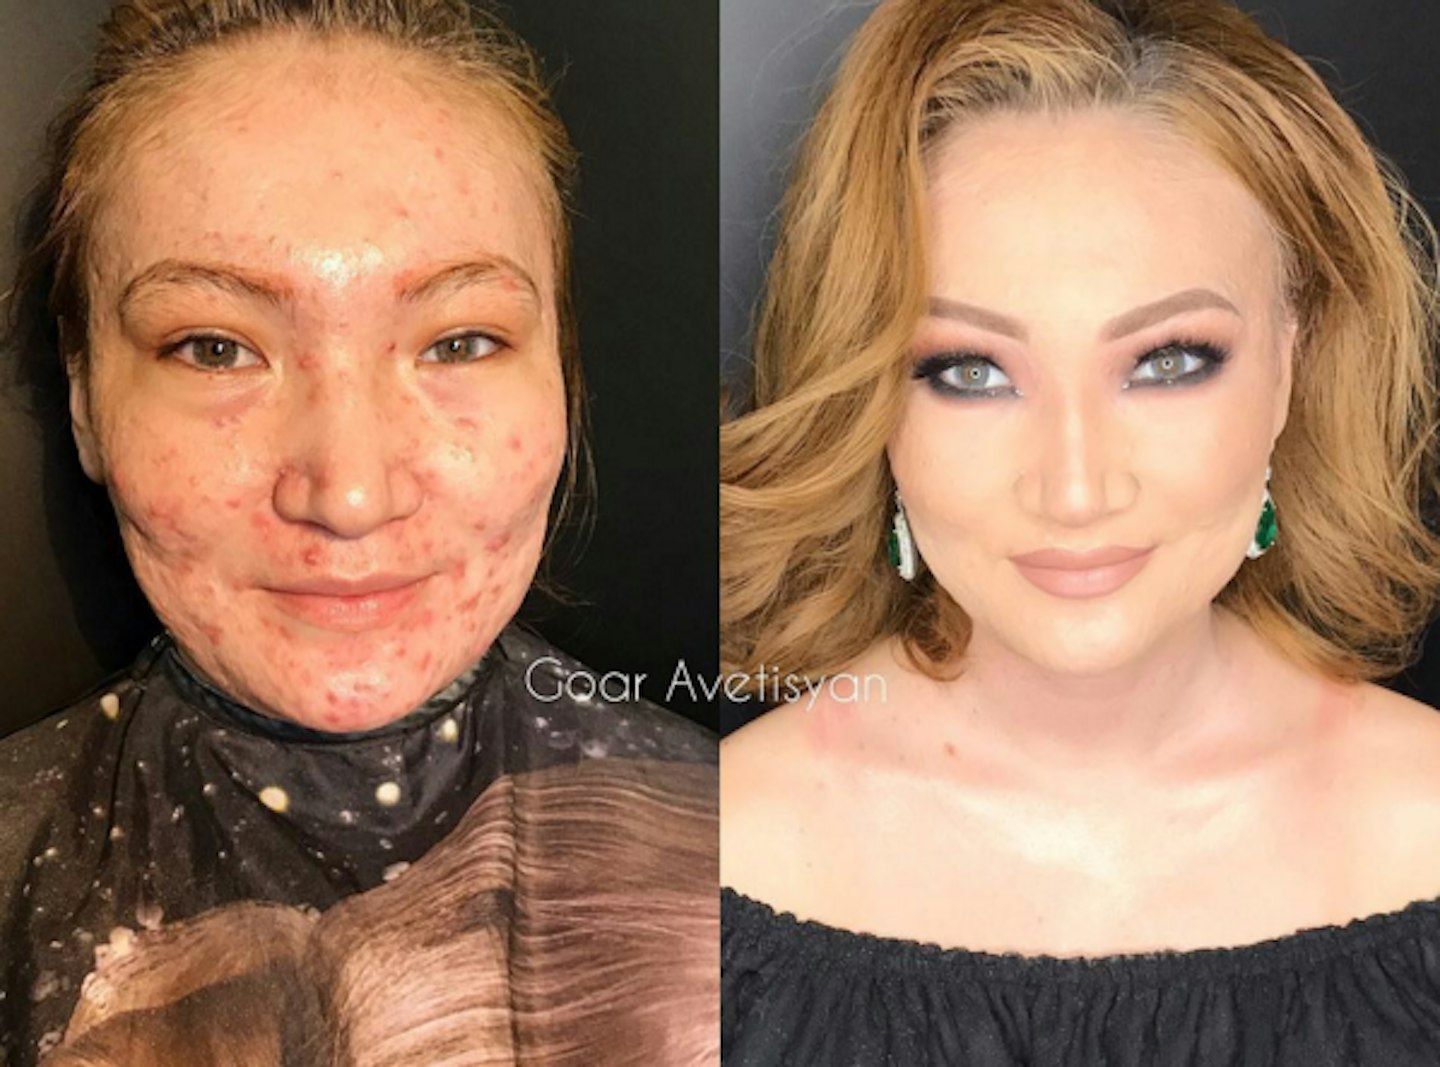 Goar Avetisyan makeup transformation